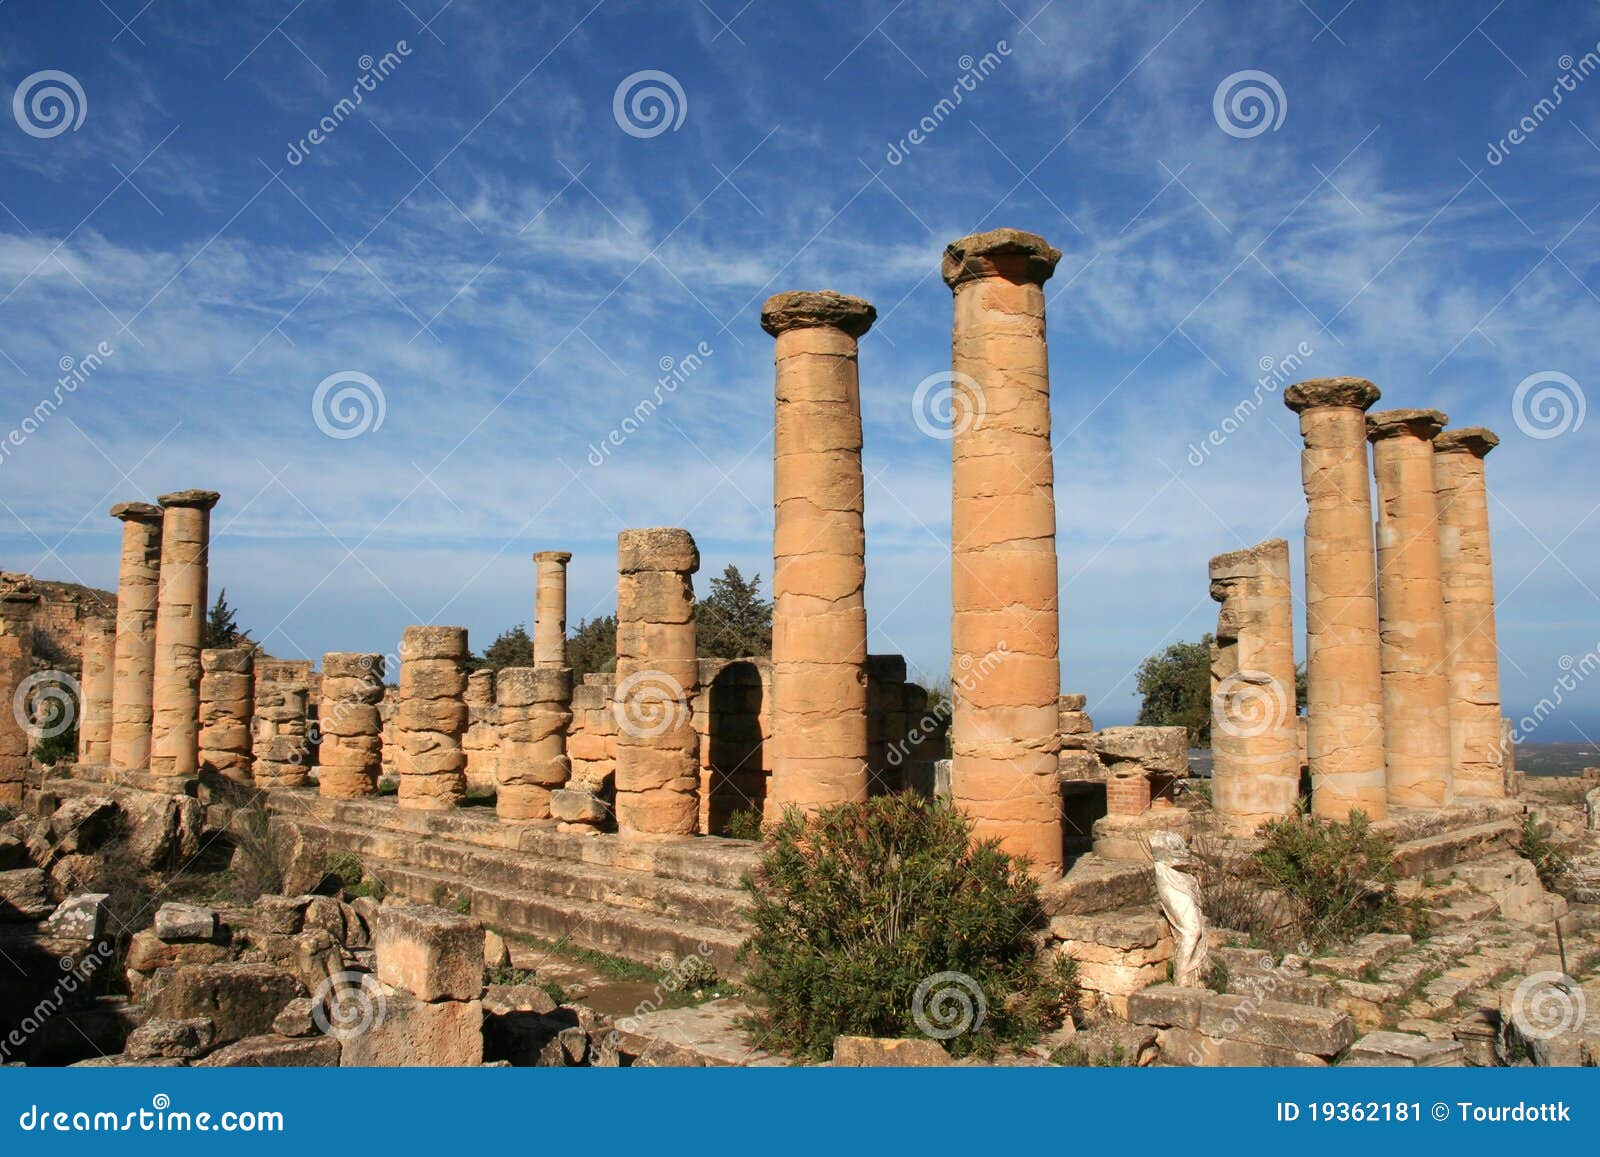 columns at temple cyrene libya